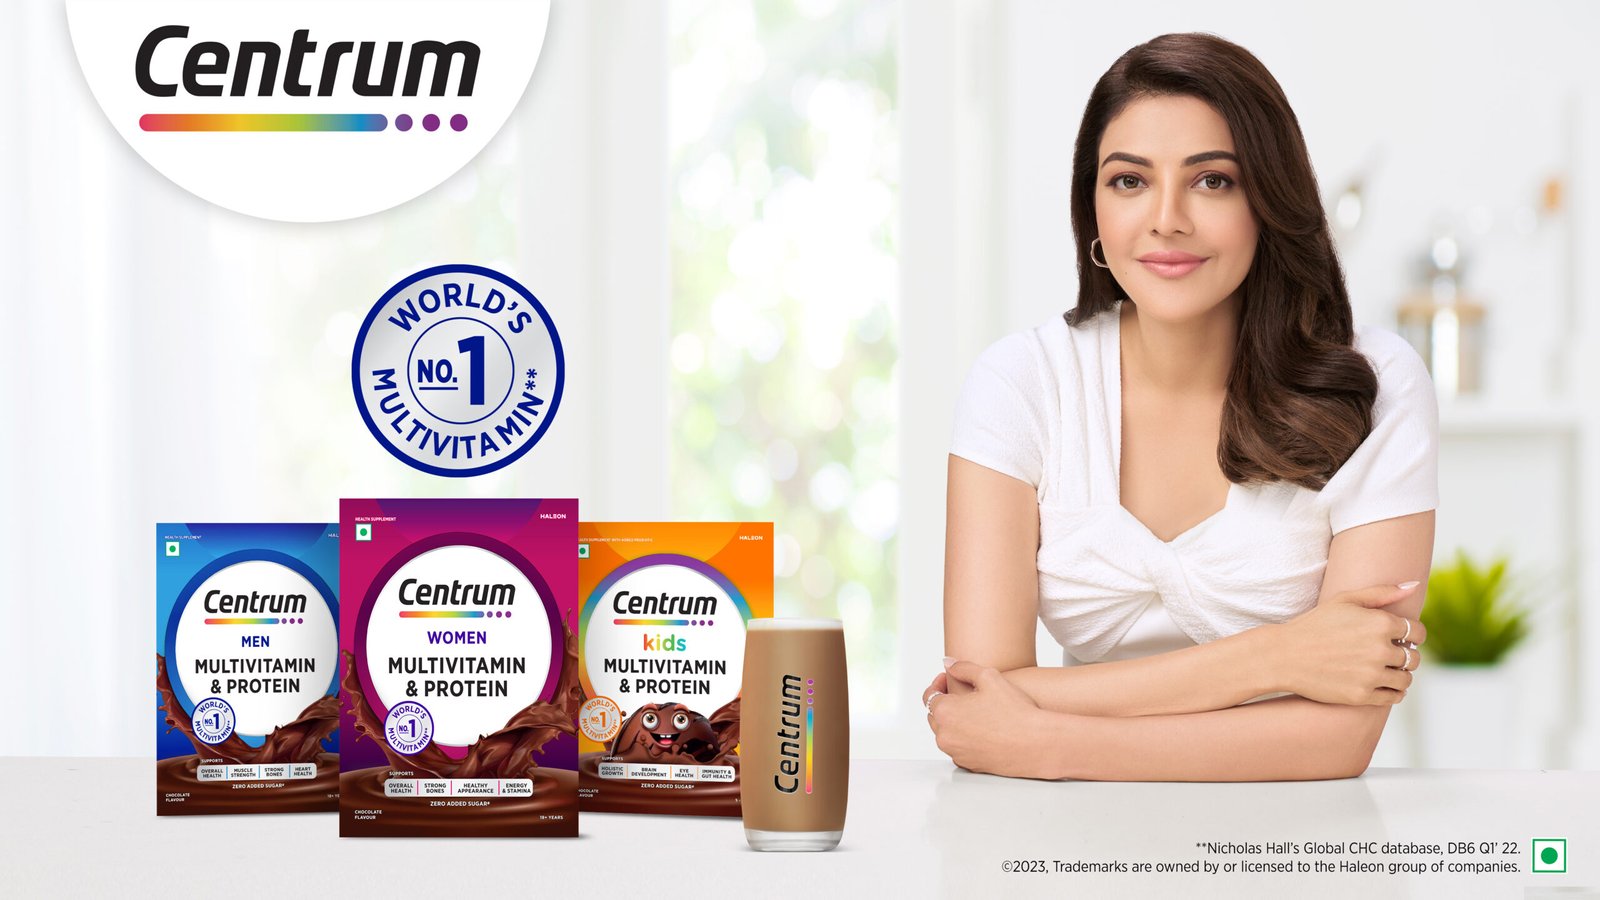 Centrum launches multivitamin & protein powders